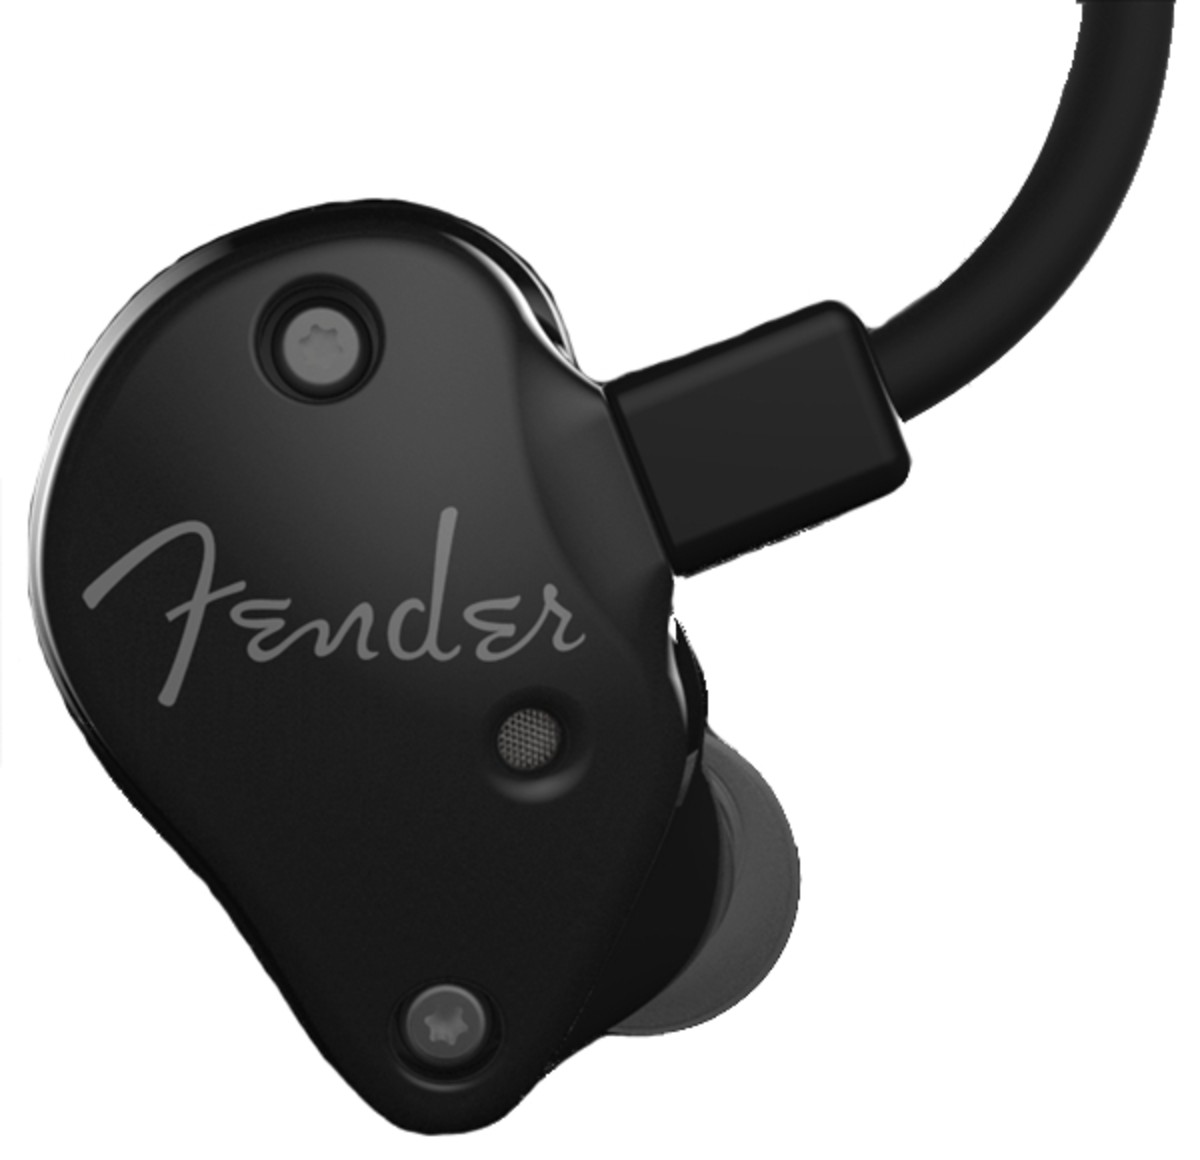 Fender FXA5 入耳式監聽耳機 (黑)